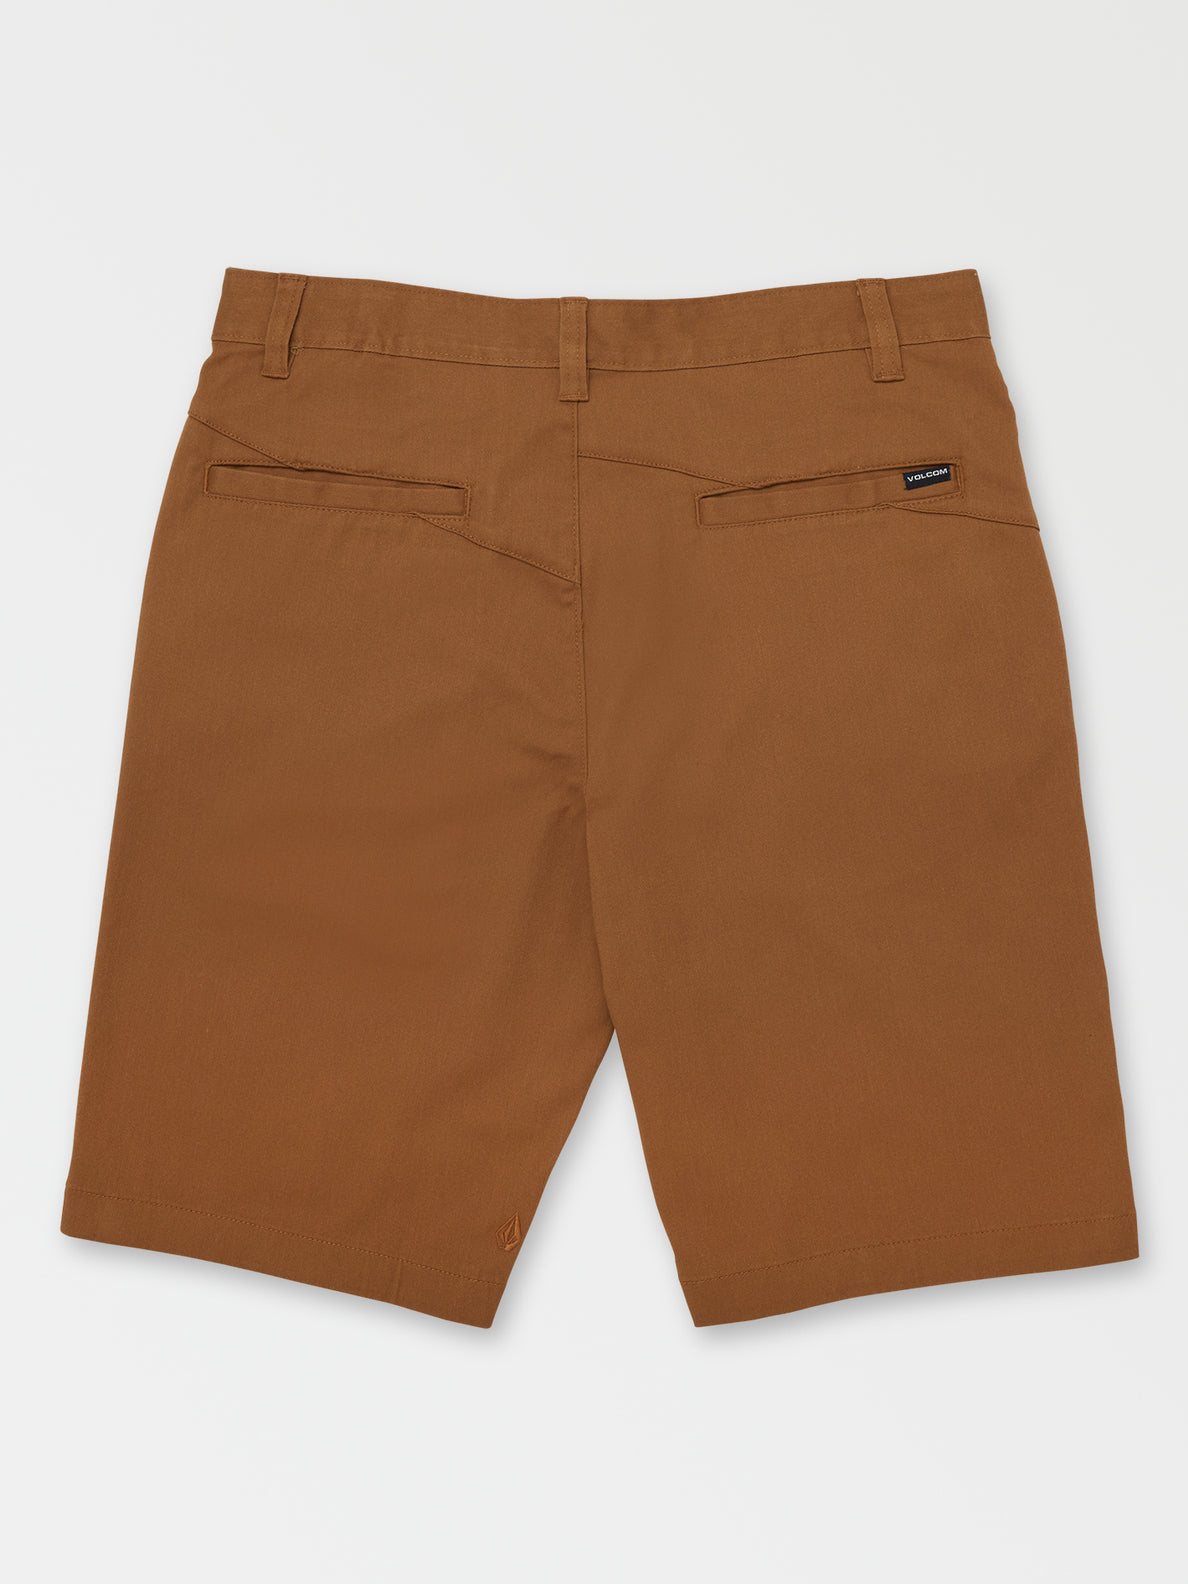 Vmonty Stretch Shorts - Golden Brown